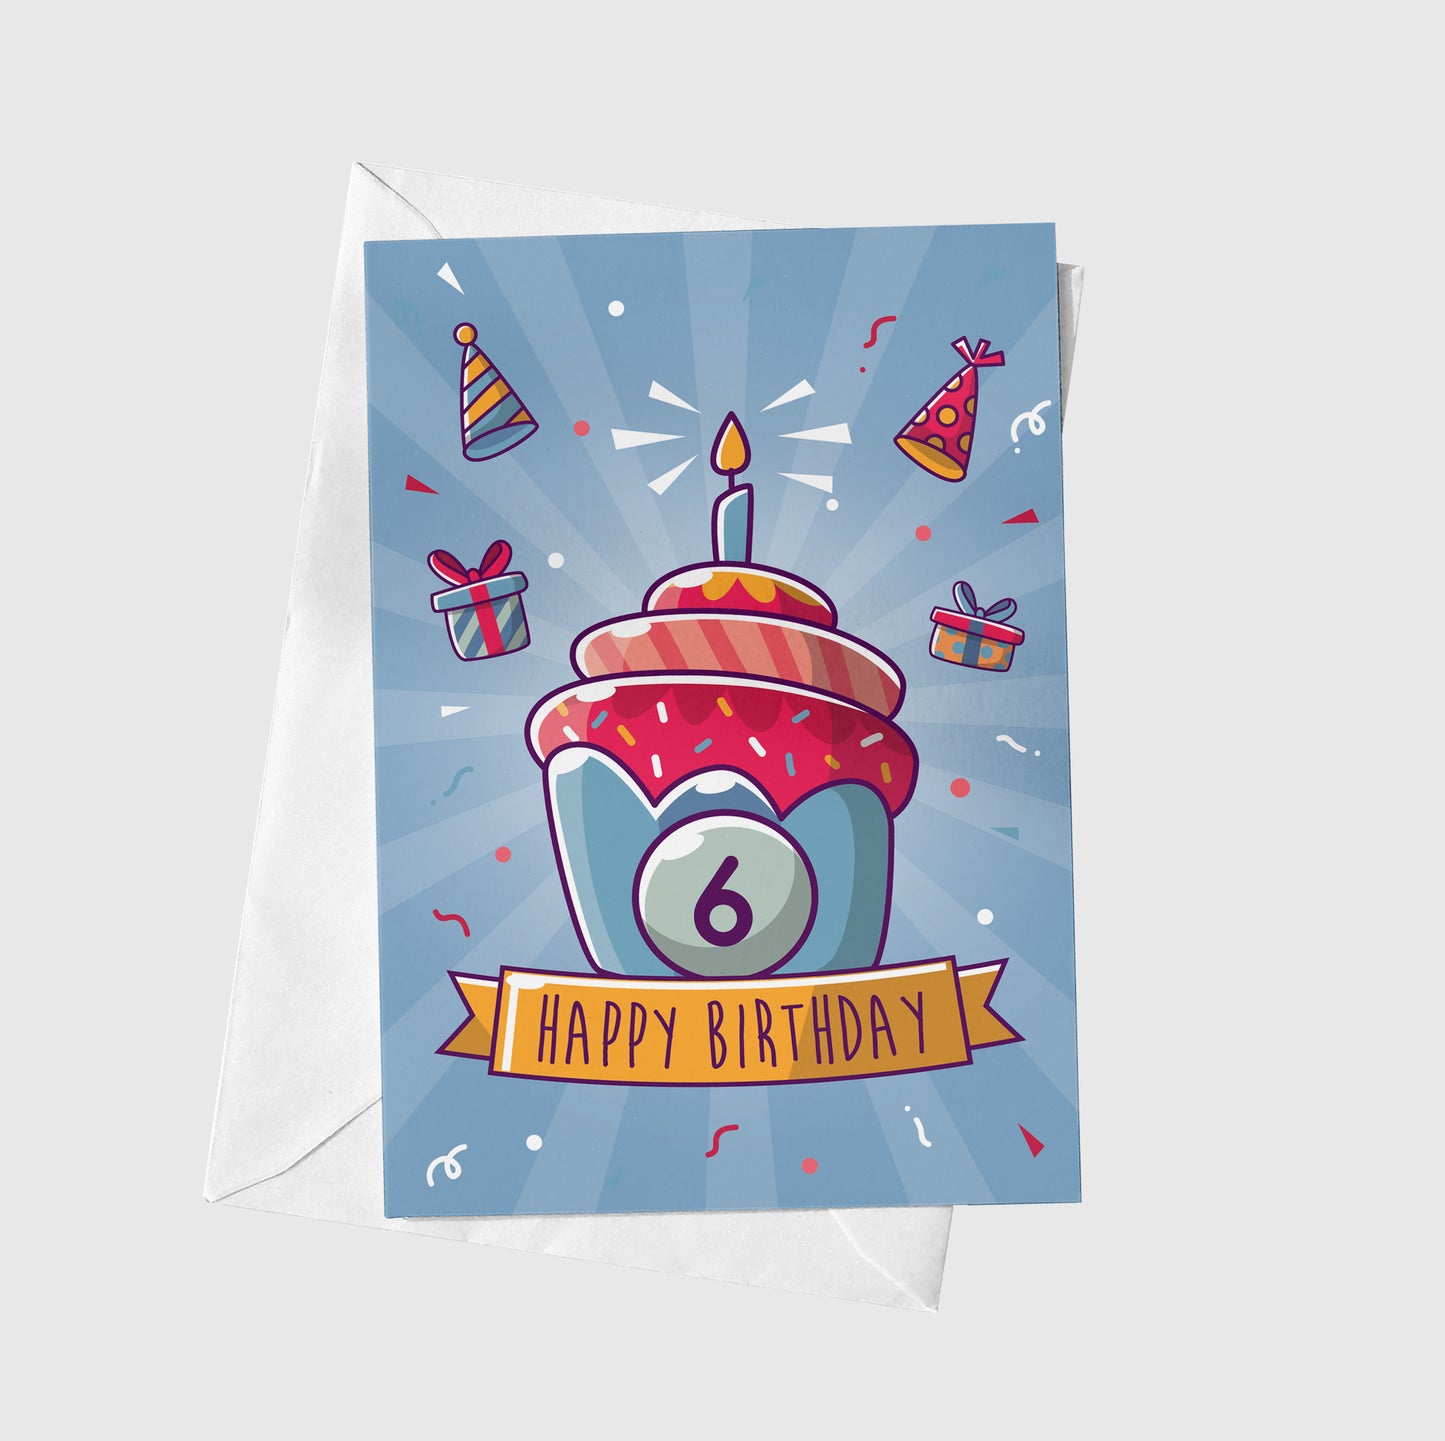 6 - Happy Birthday